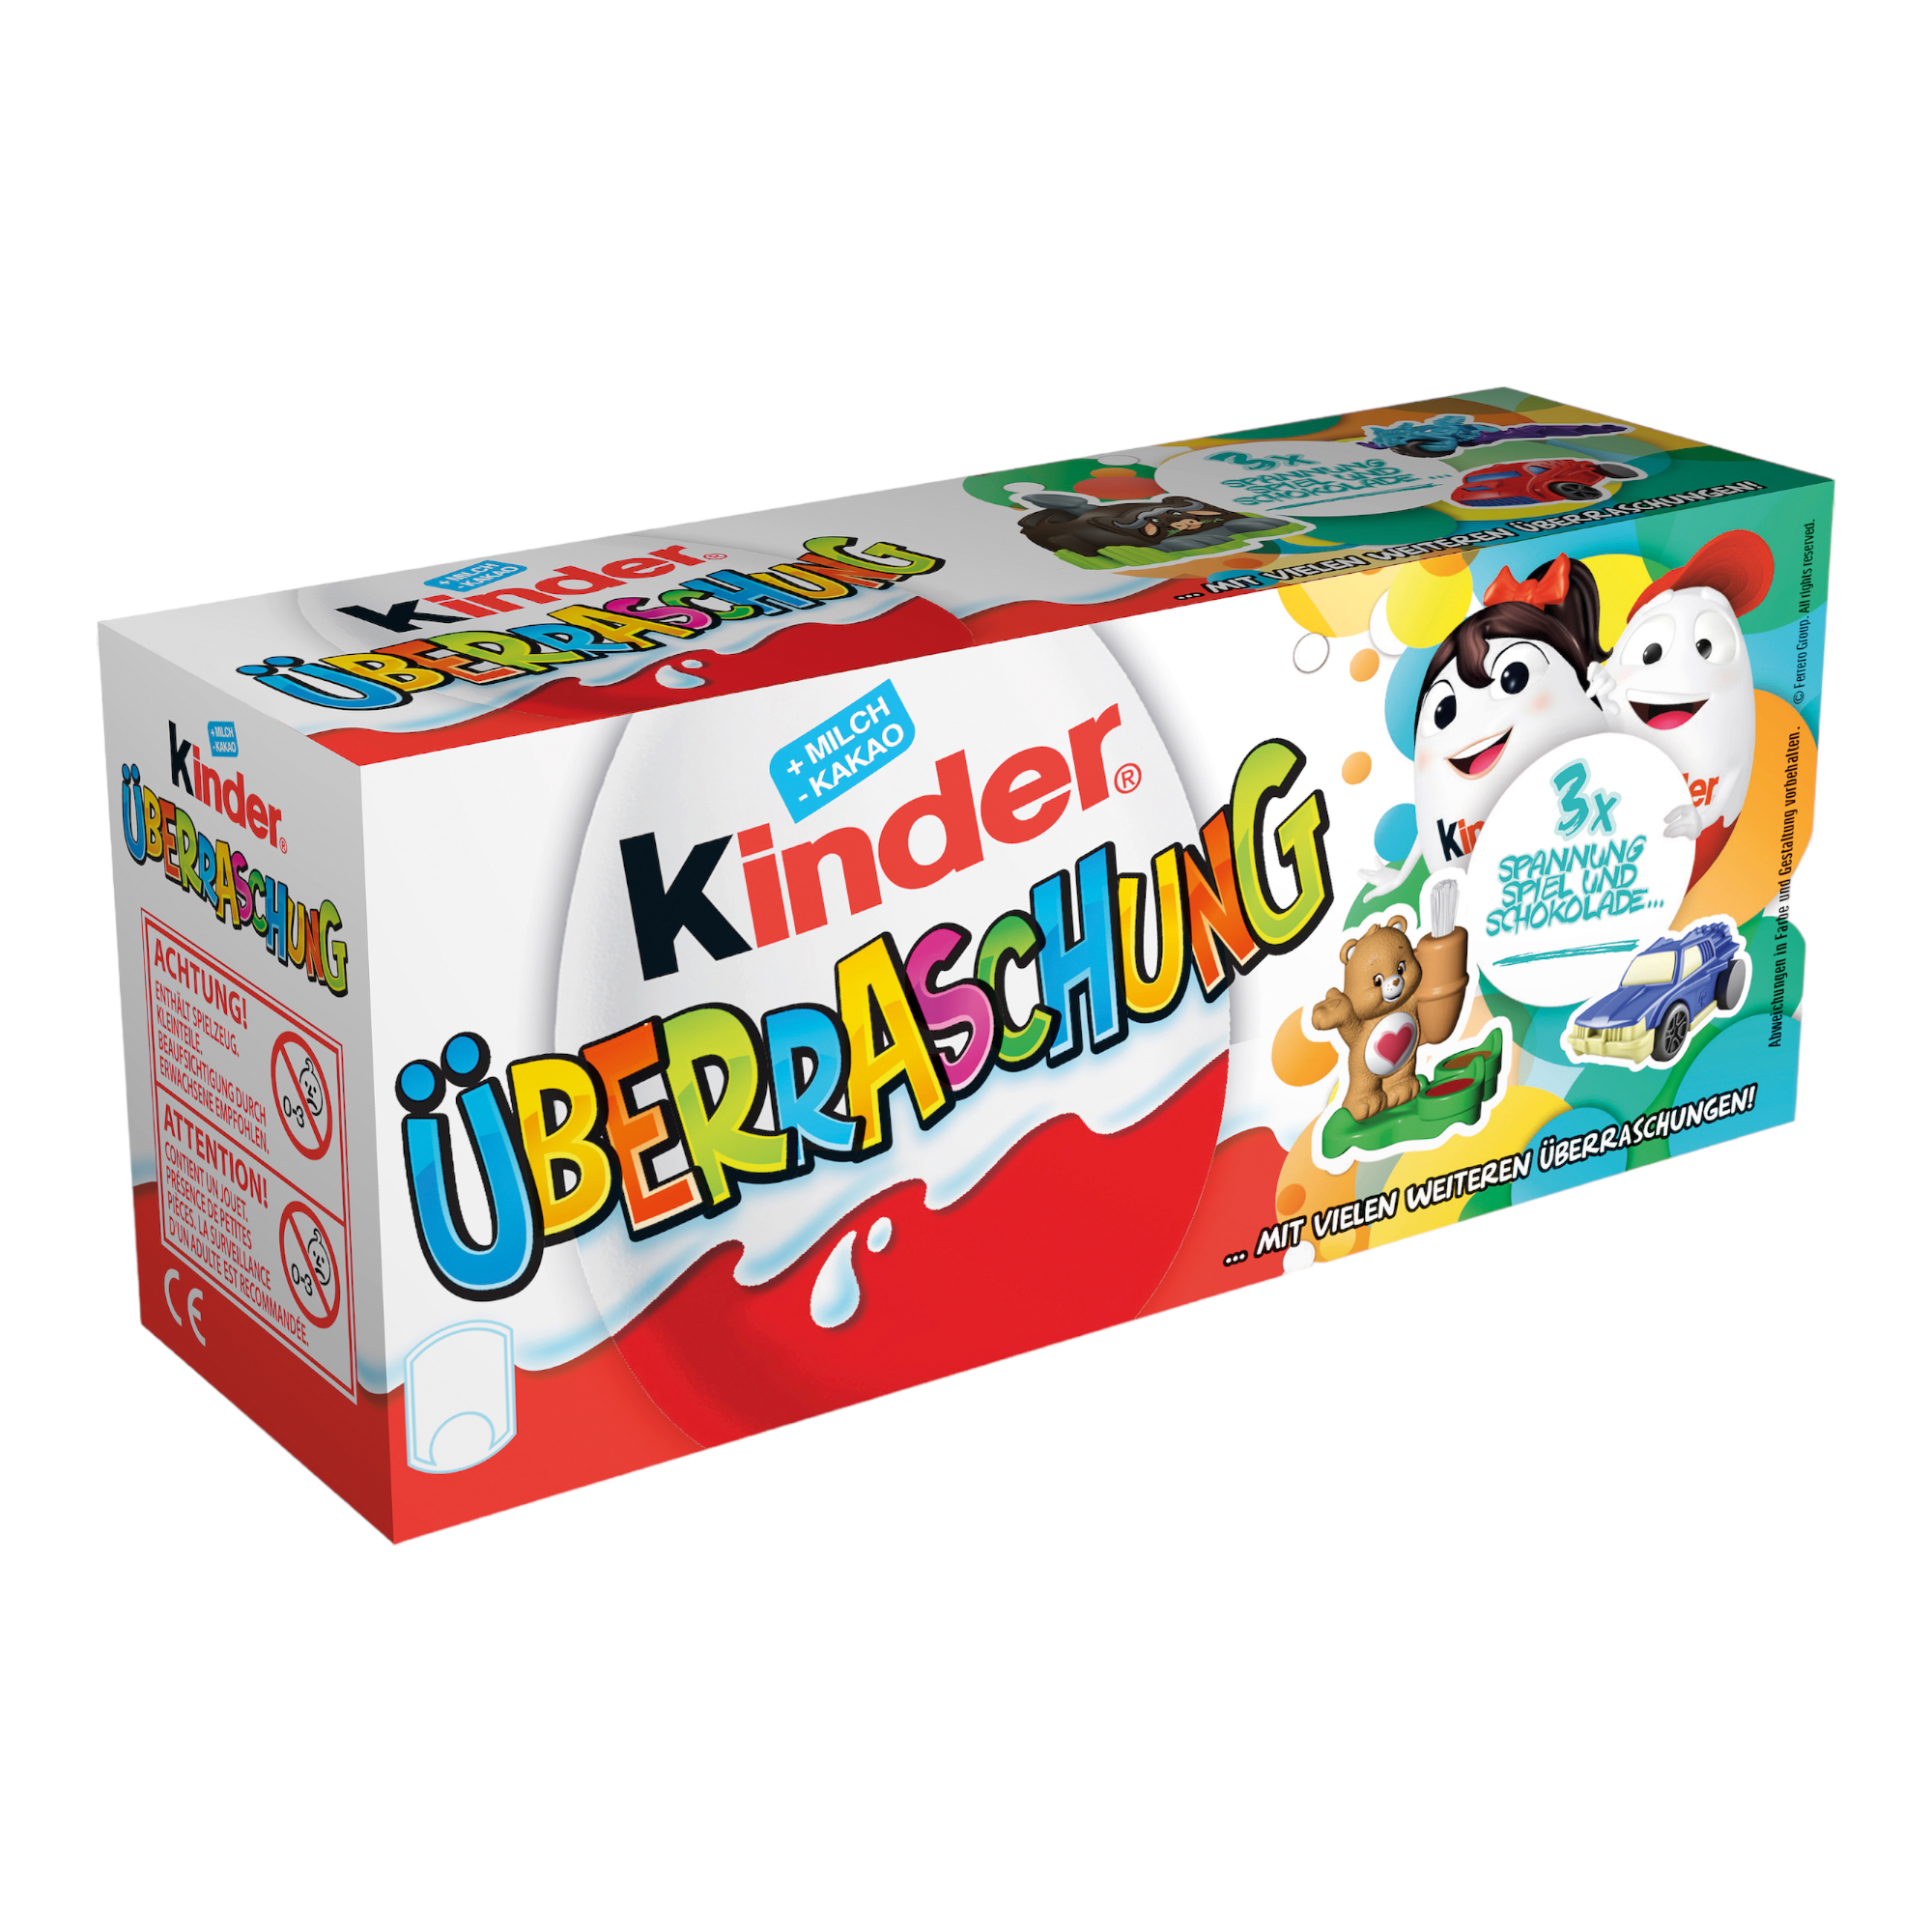 Kinder Surprise 3-pack, Worldwide delivery